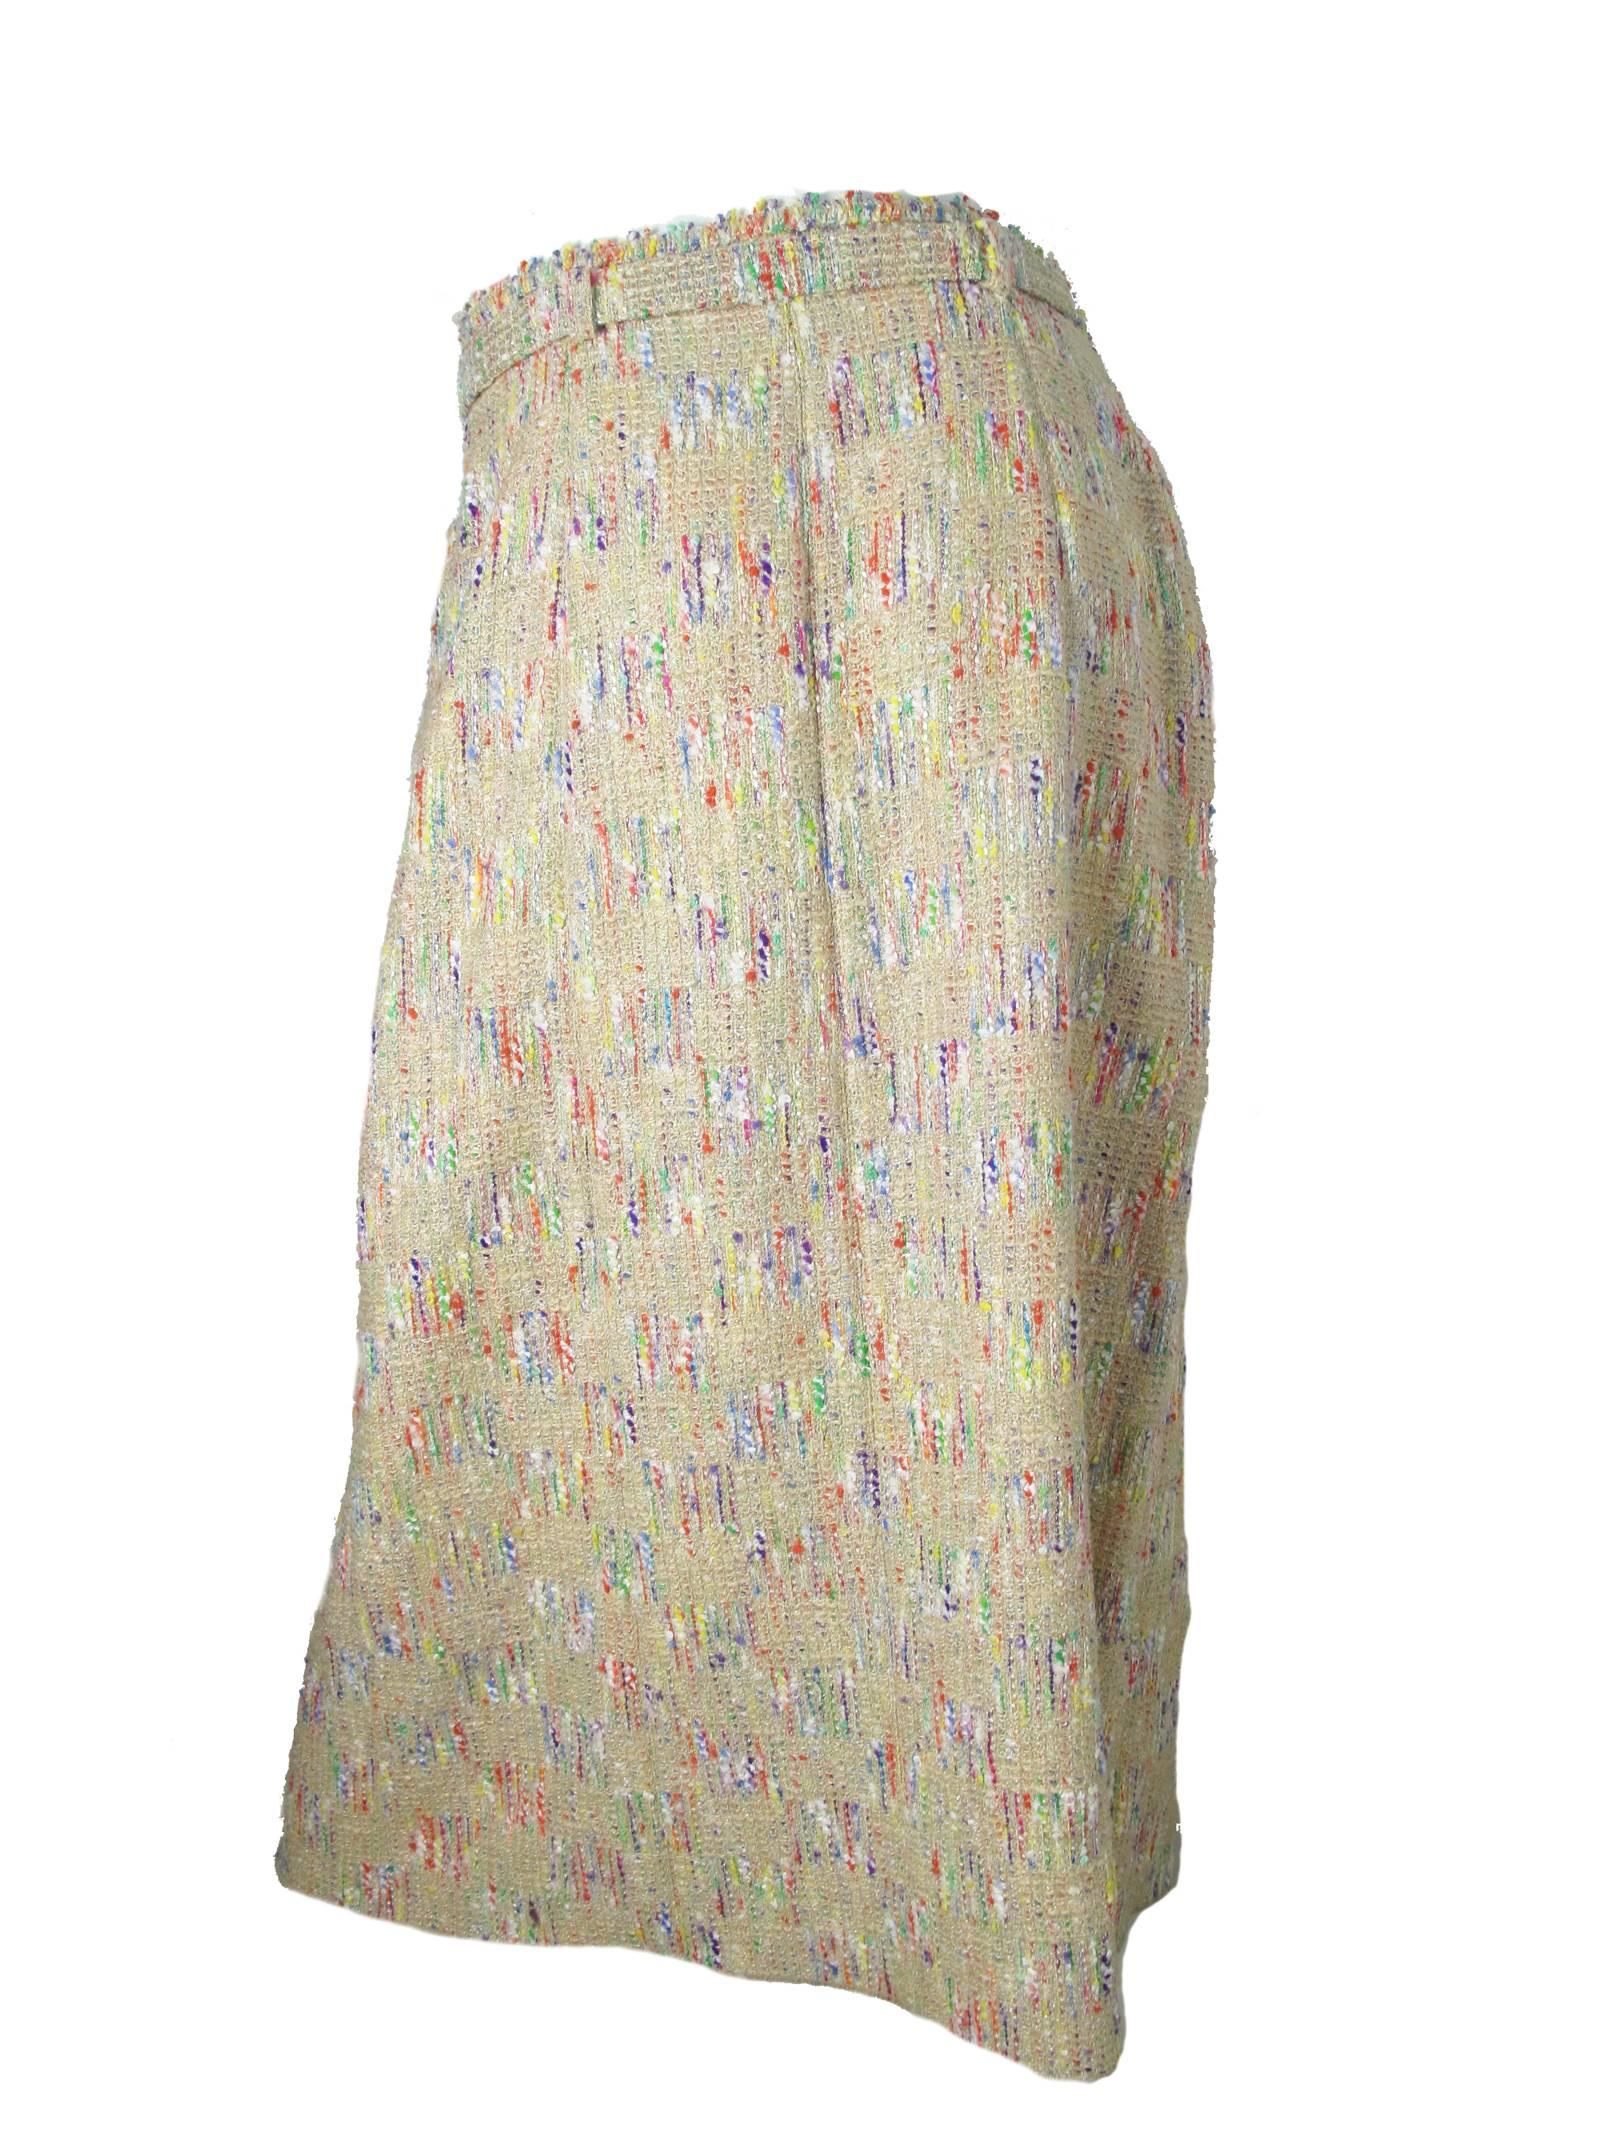 Beige  Chanel Fantasy tweed wrap skirt, 1998 